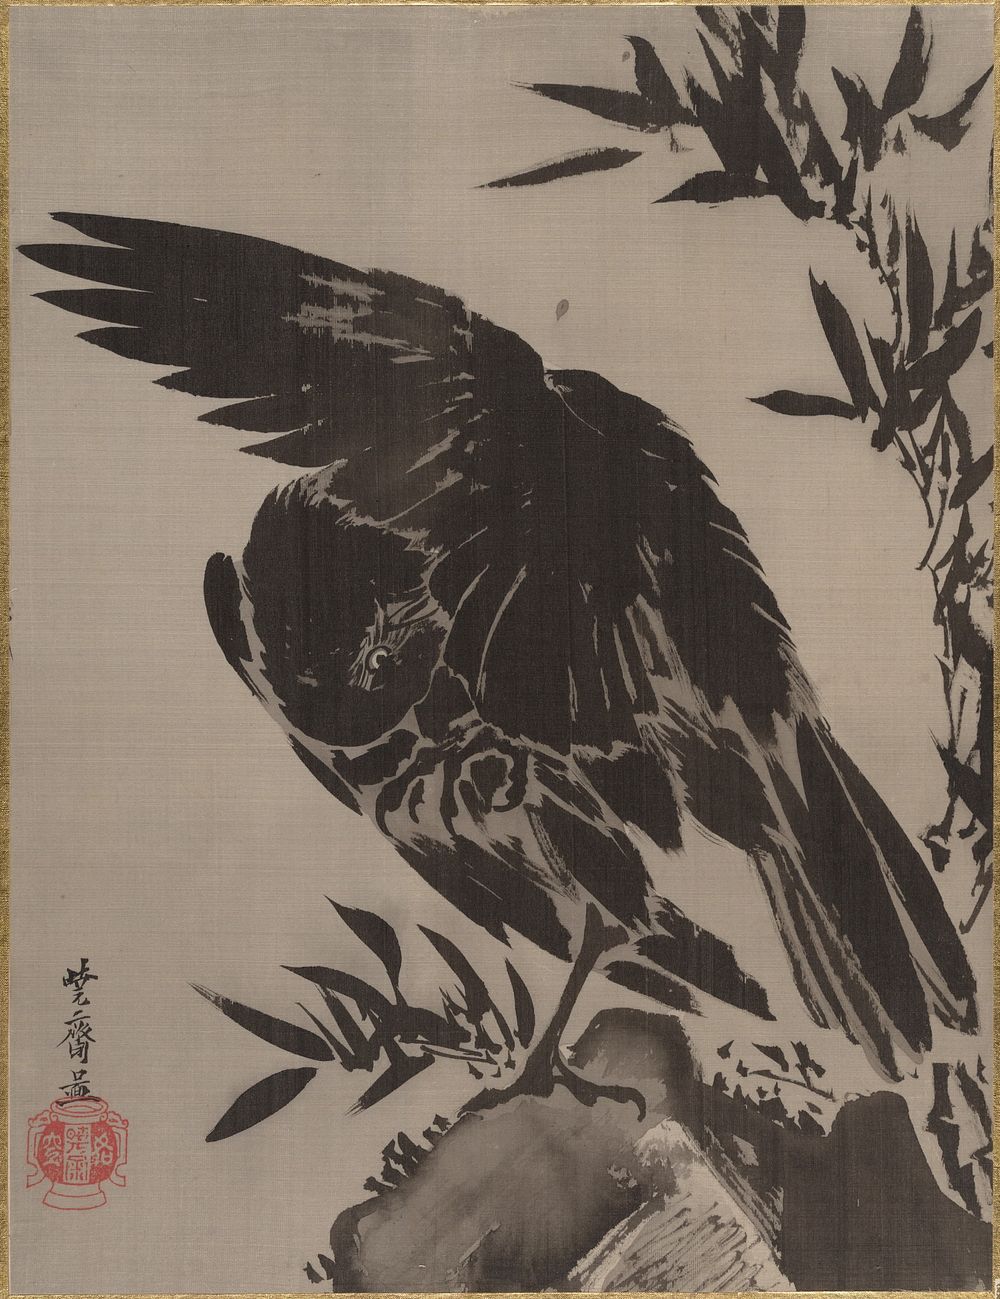 Kawanabe Kyōsai - Crow on a Rock - 14.76.61.21 - Metropolitan Museum of Art